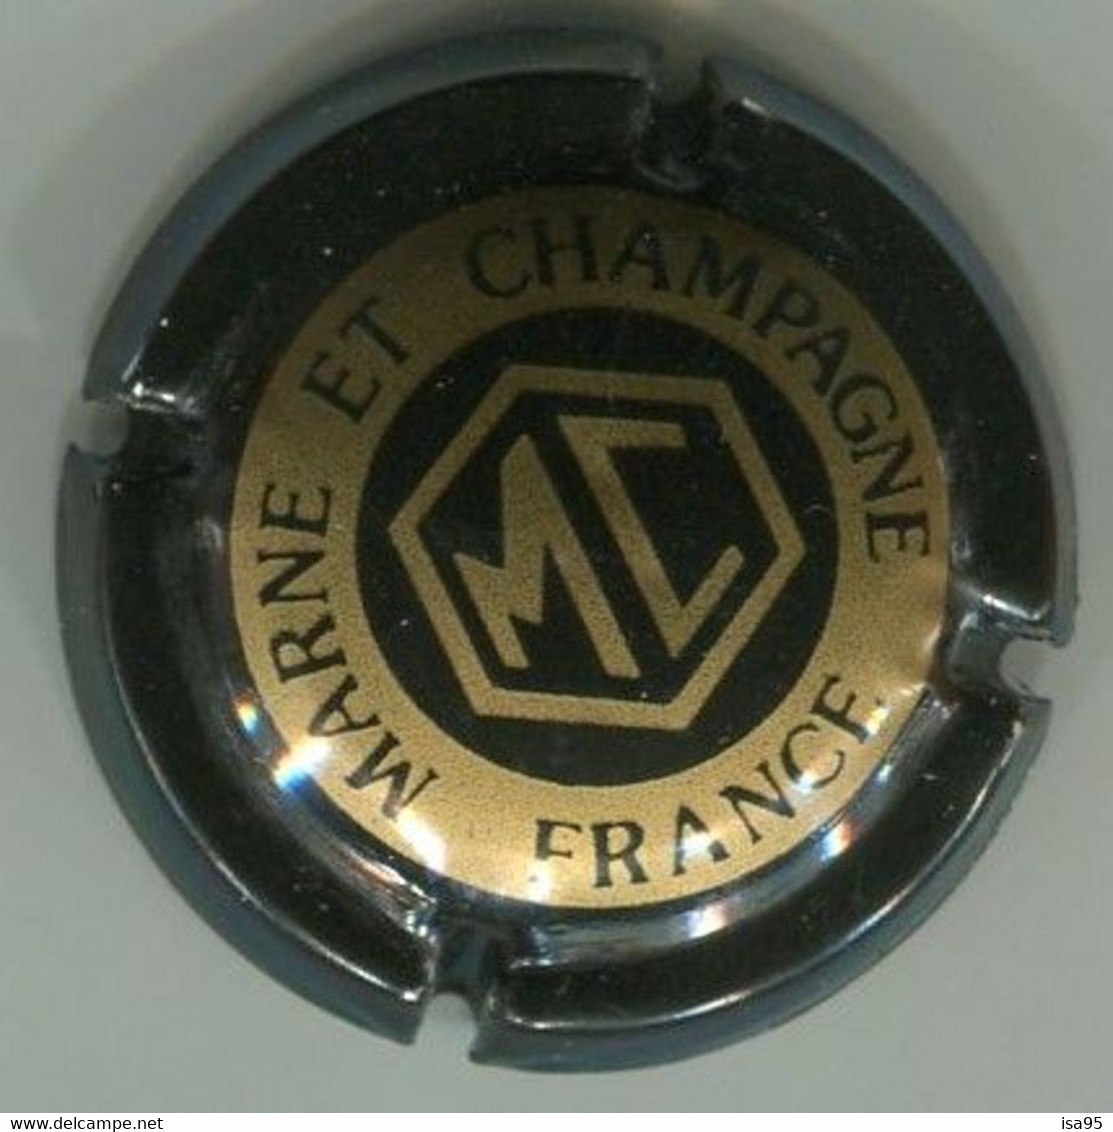 CAPSULE-CHAMPAGNE MARNE ET CHAMPAGNE N°08 Noir & Or Mat - Marne Et Champagne